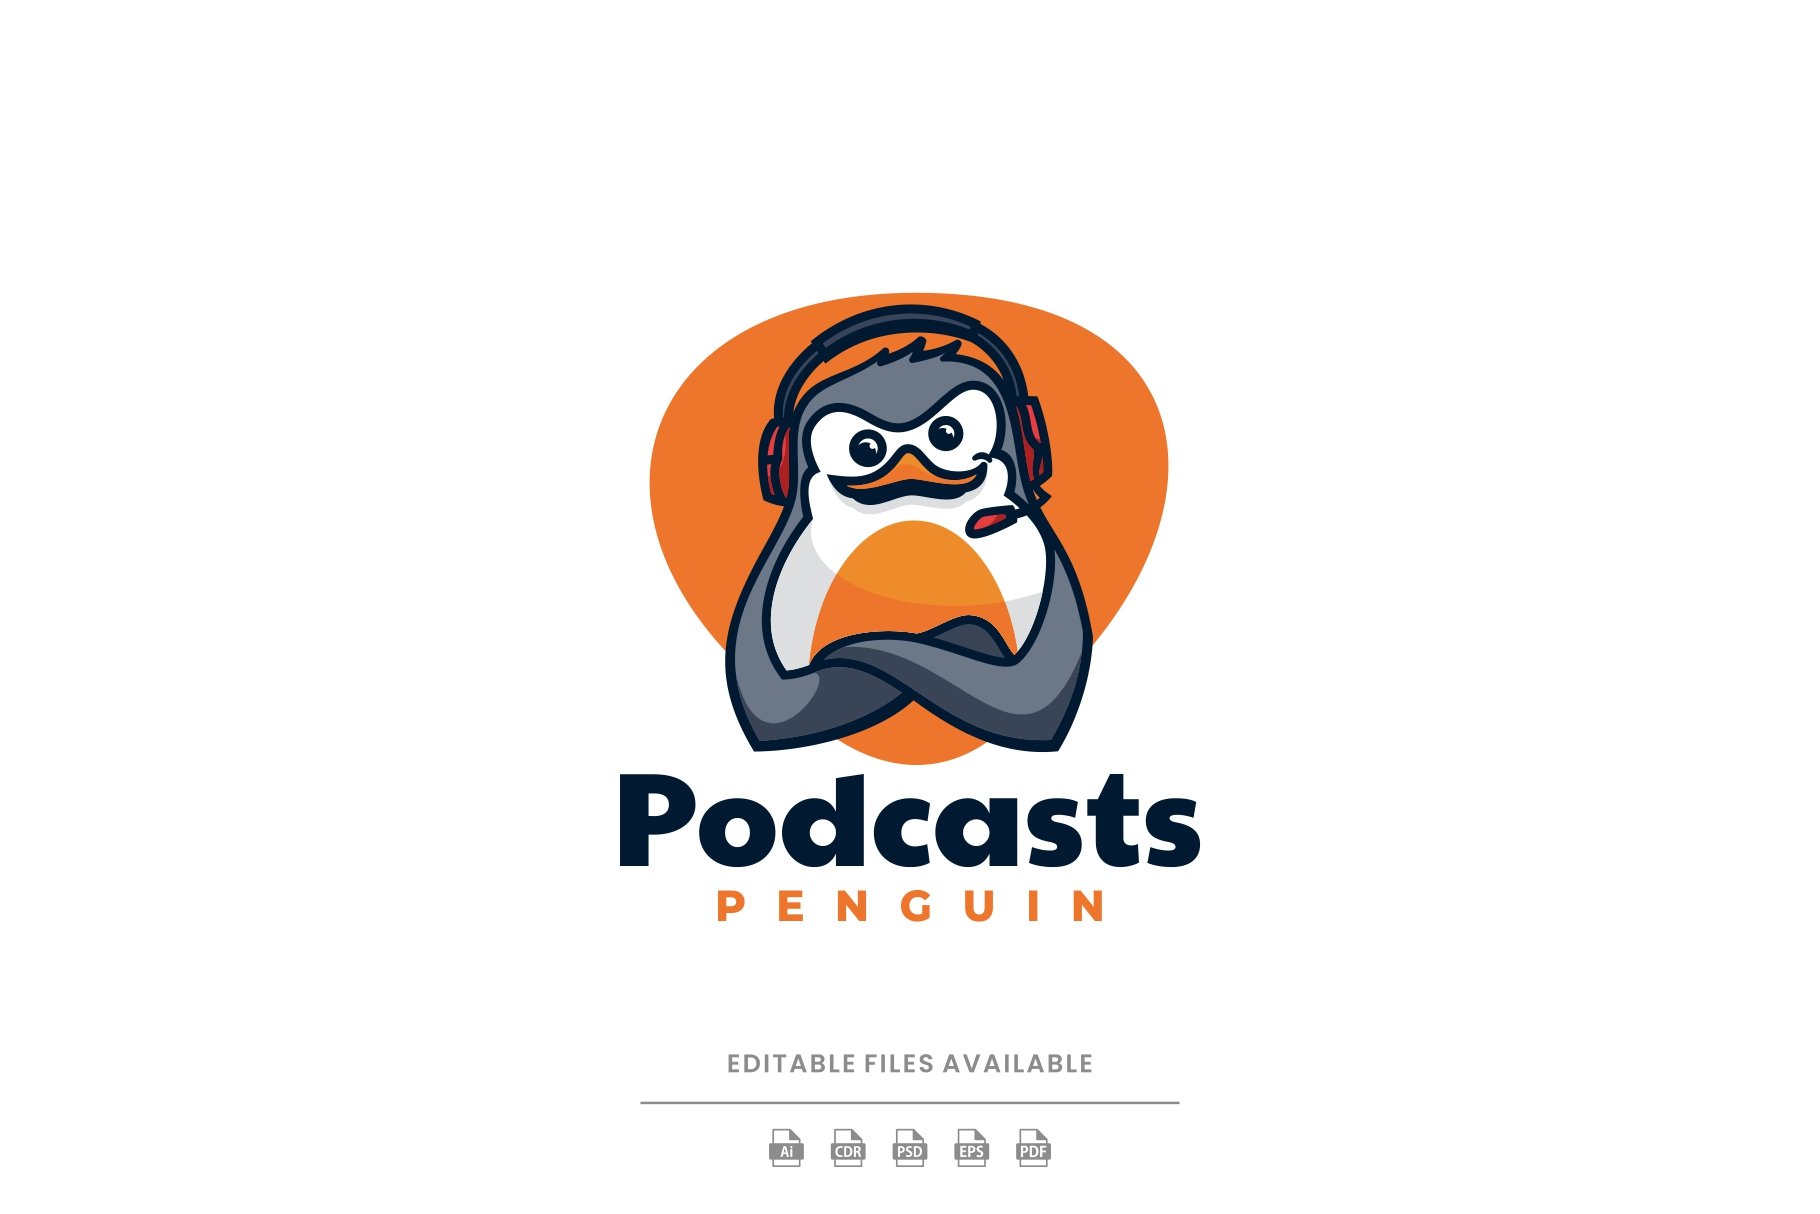 Penguin Cartoon Logo cover image.